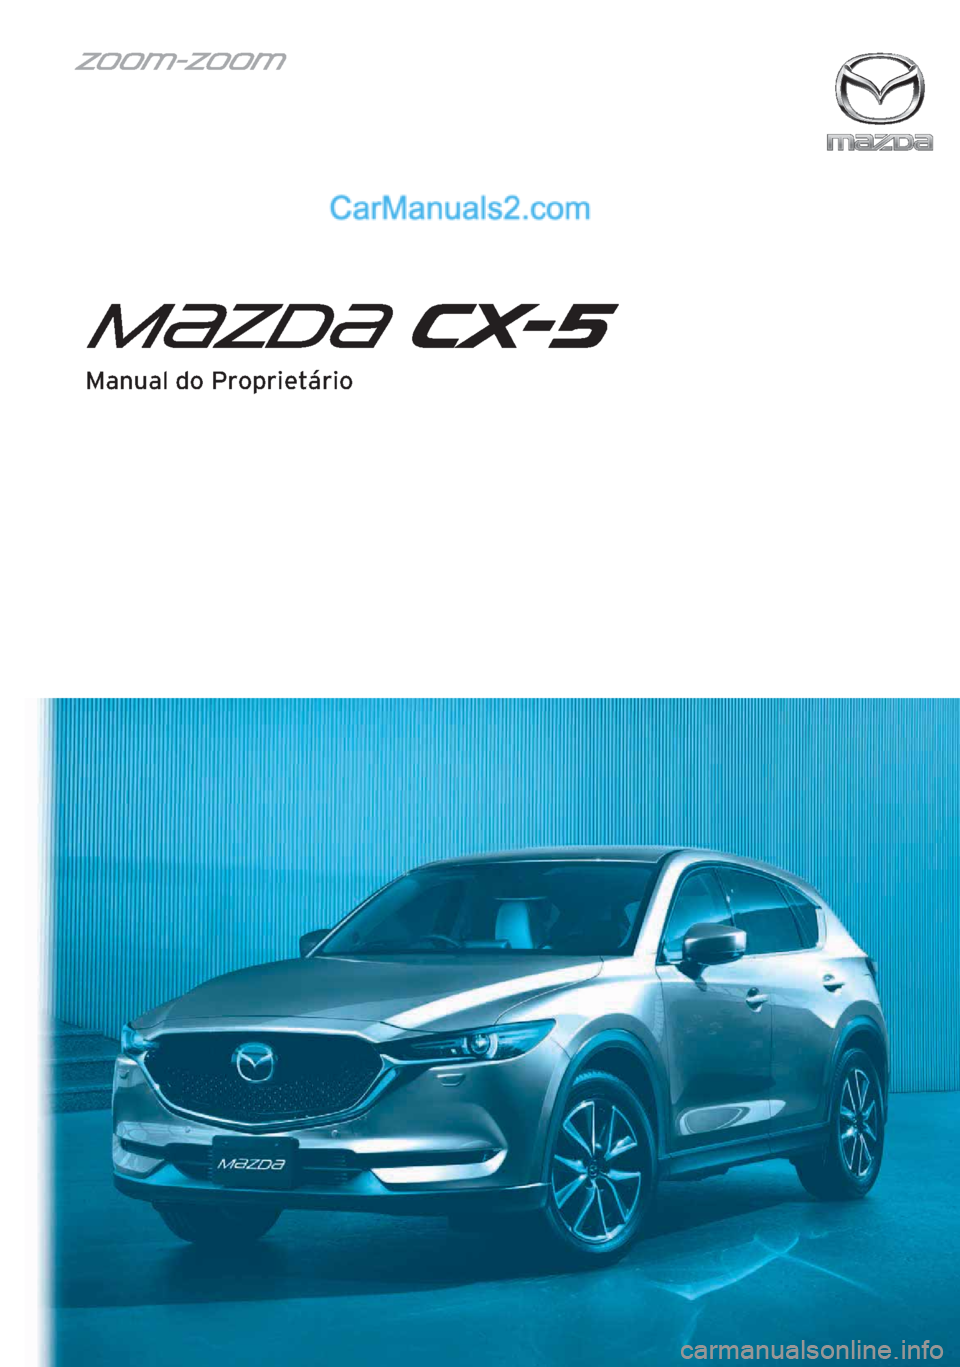 MAZDA MODEL CX-5 2017  Manual do proprietário (in Portuguese) Manual do Proprietário  